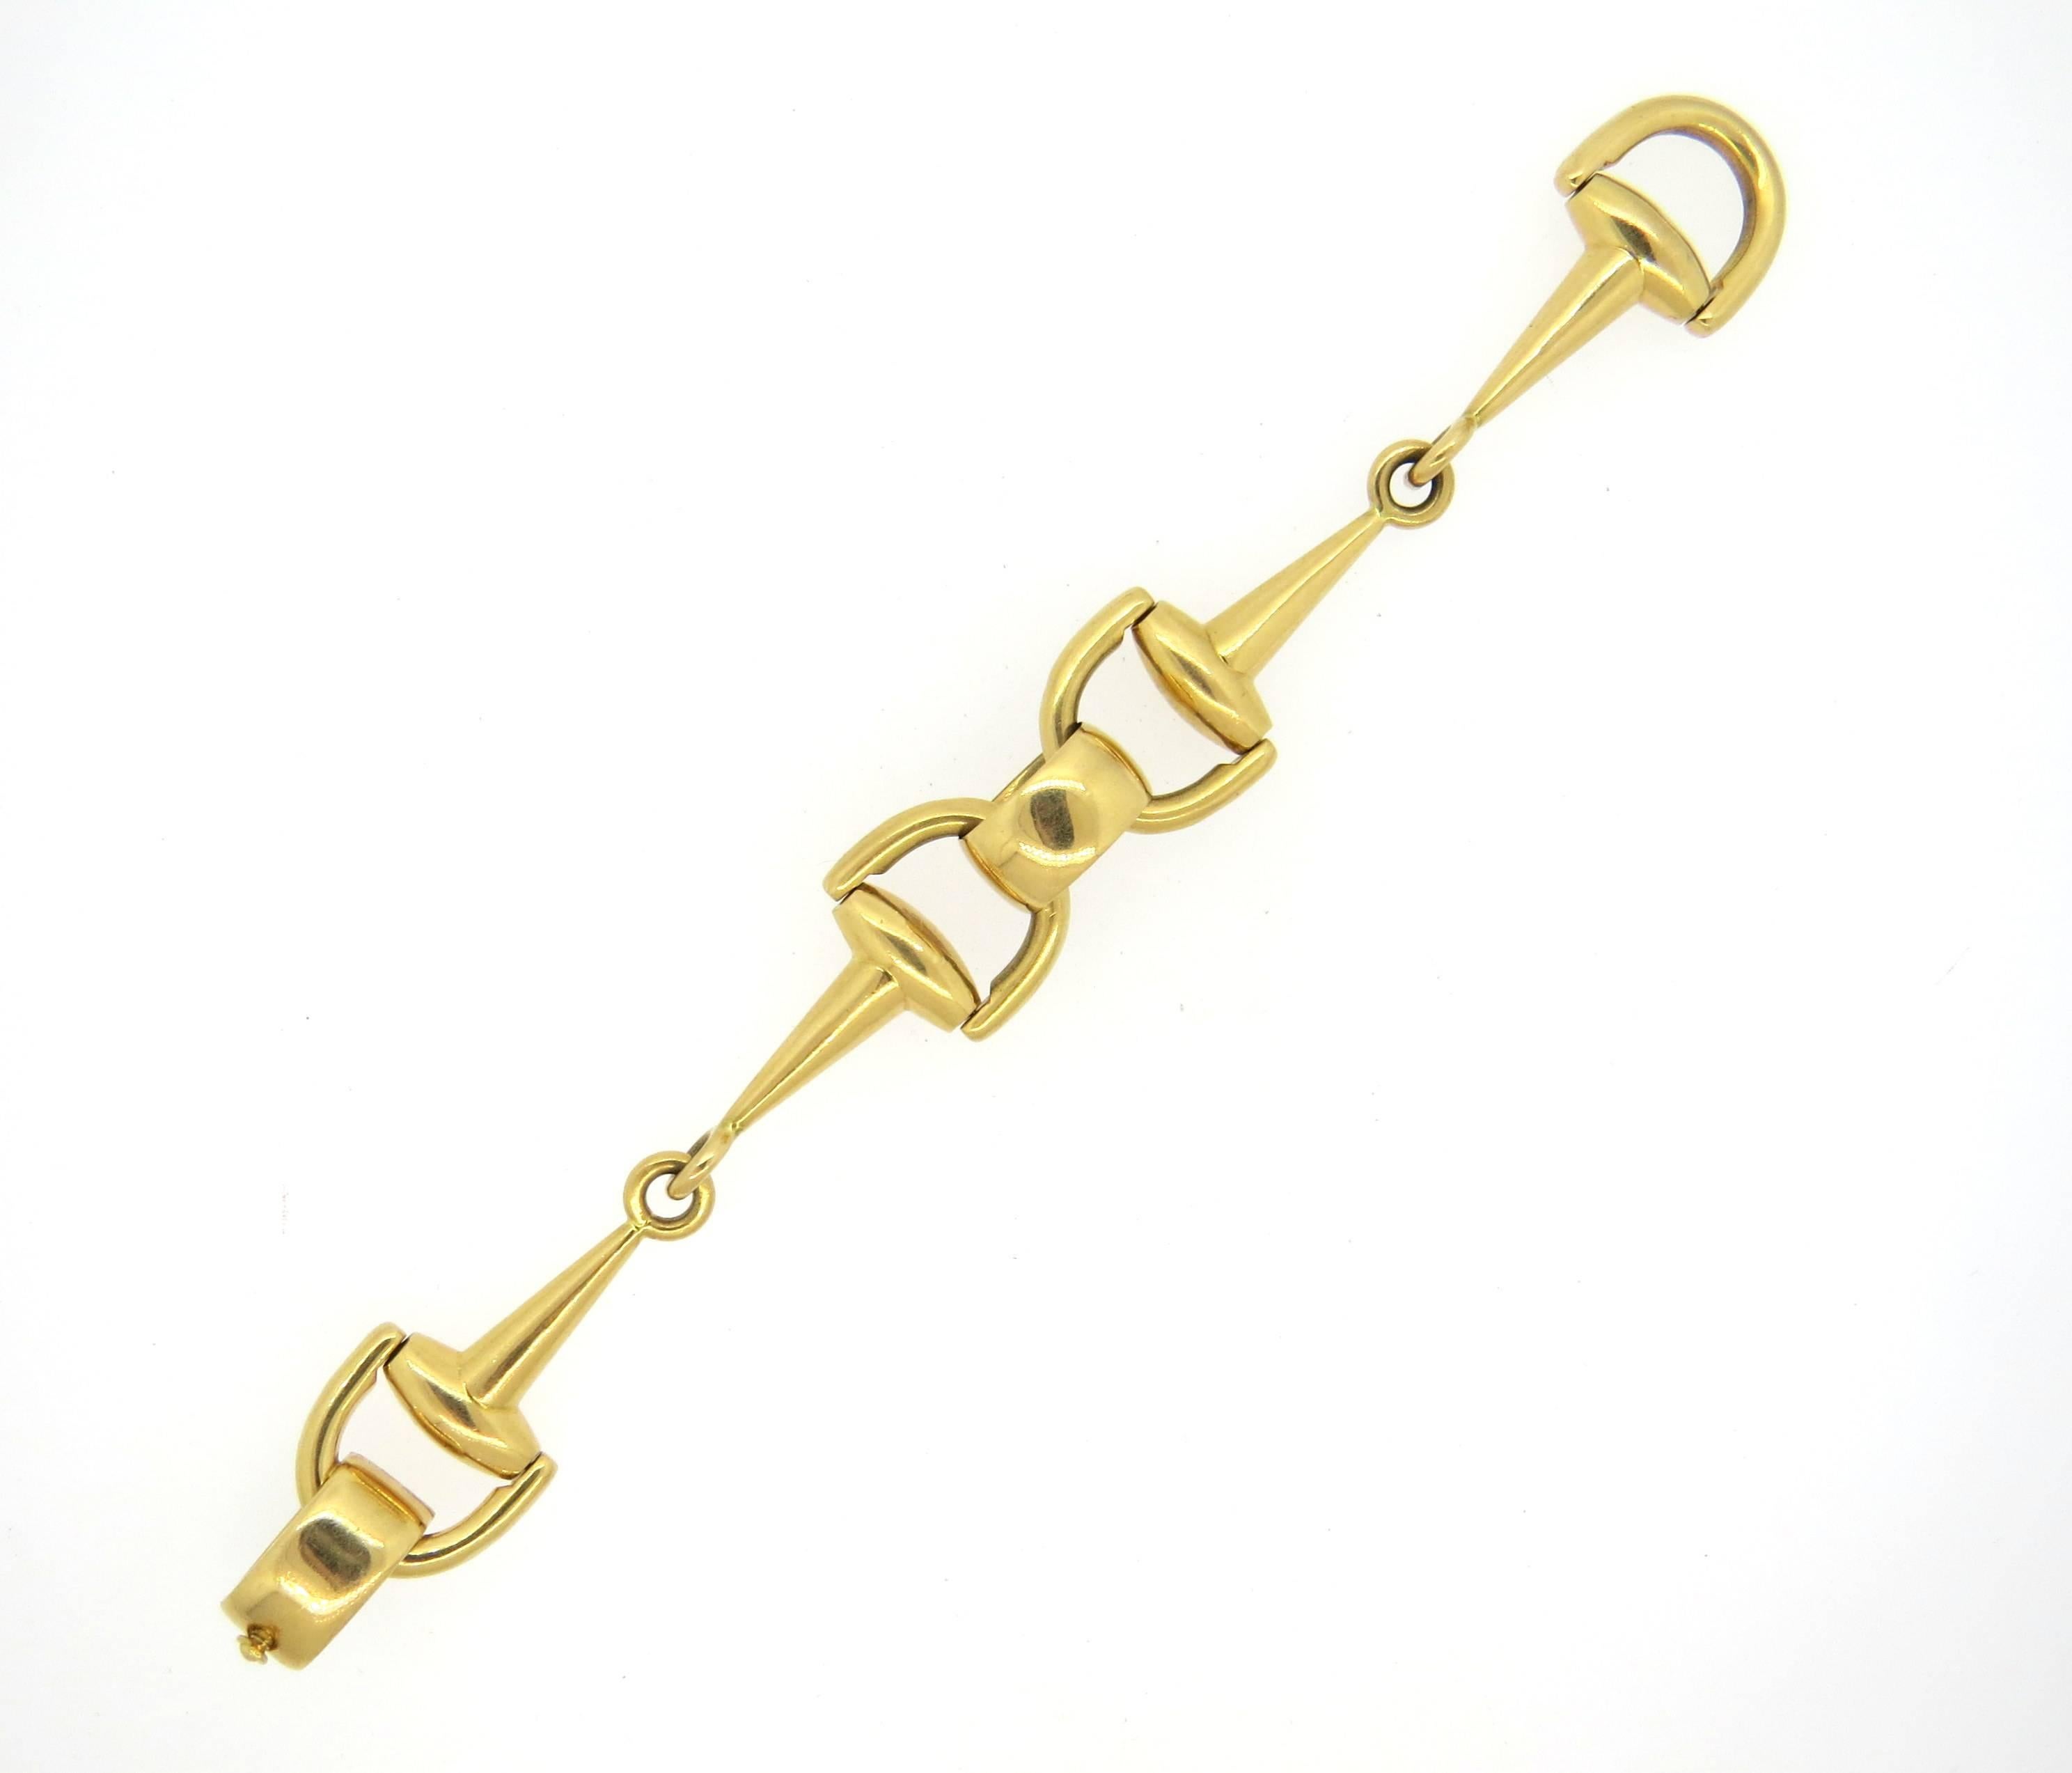 An 18k yellow gold unusual link bracelet, measuring 8